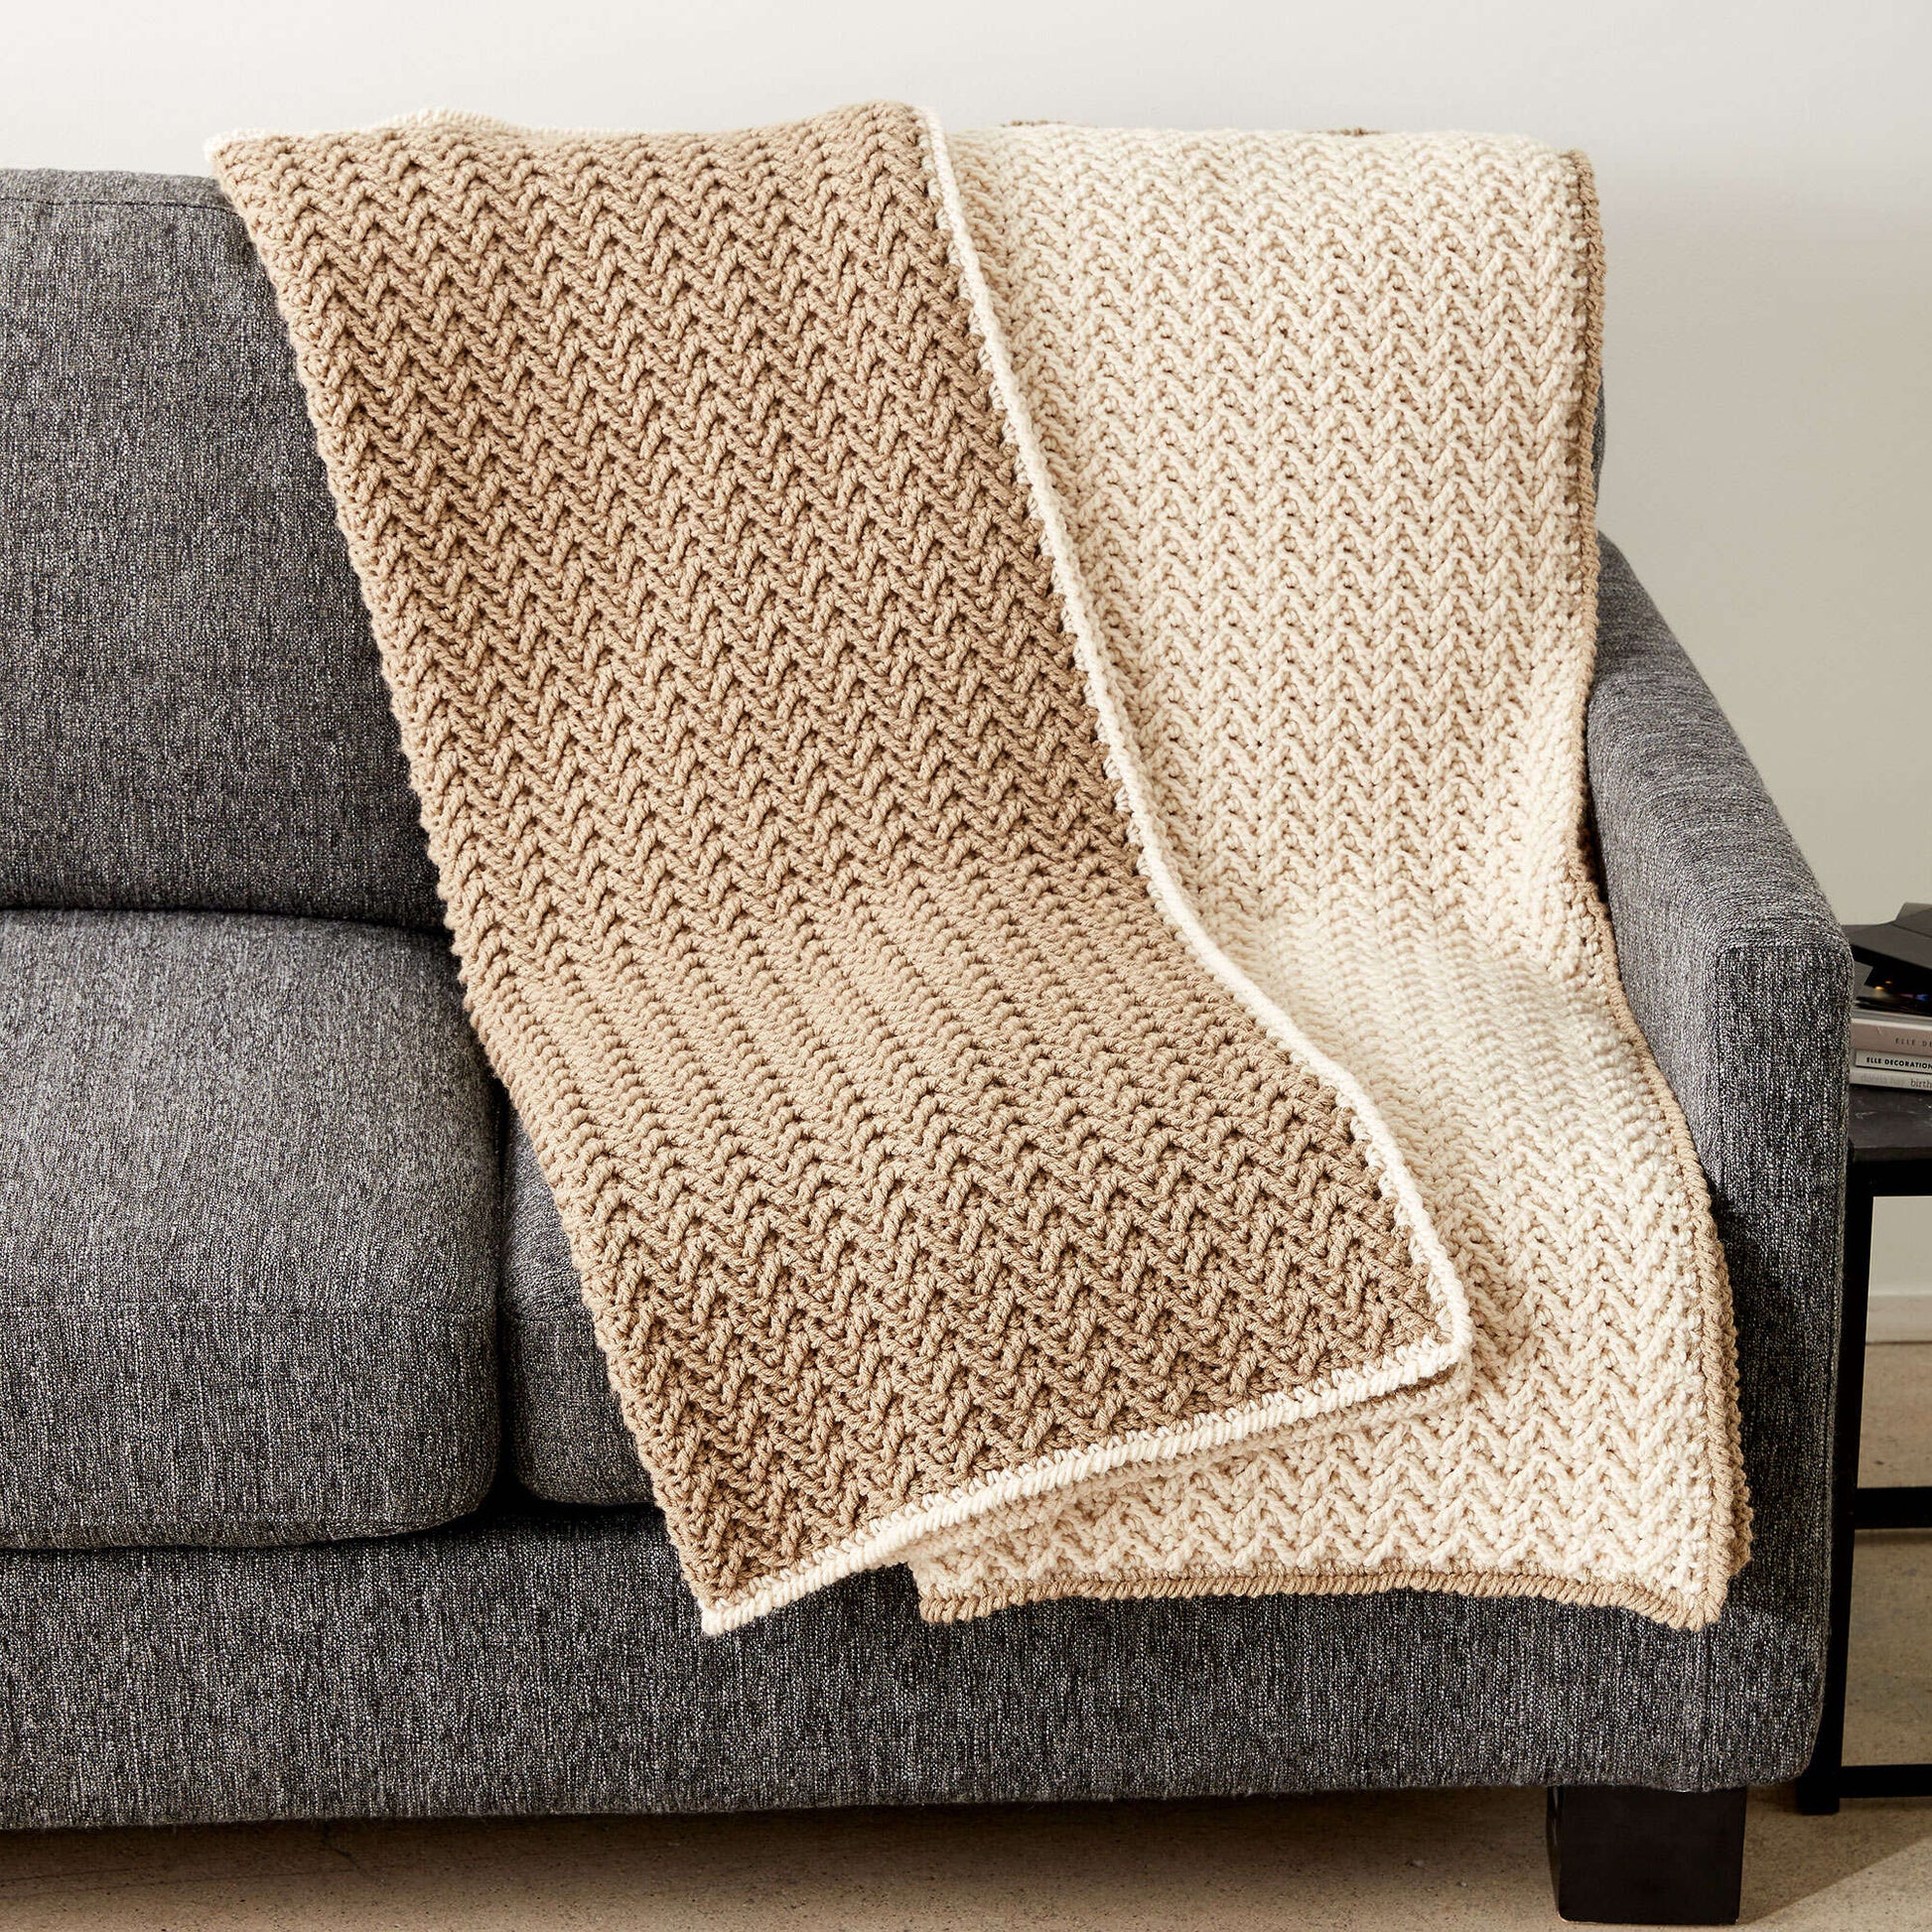 Free Caron Crochet Texture Lap Blanket Pattern